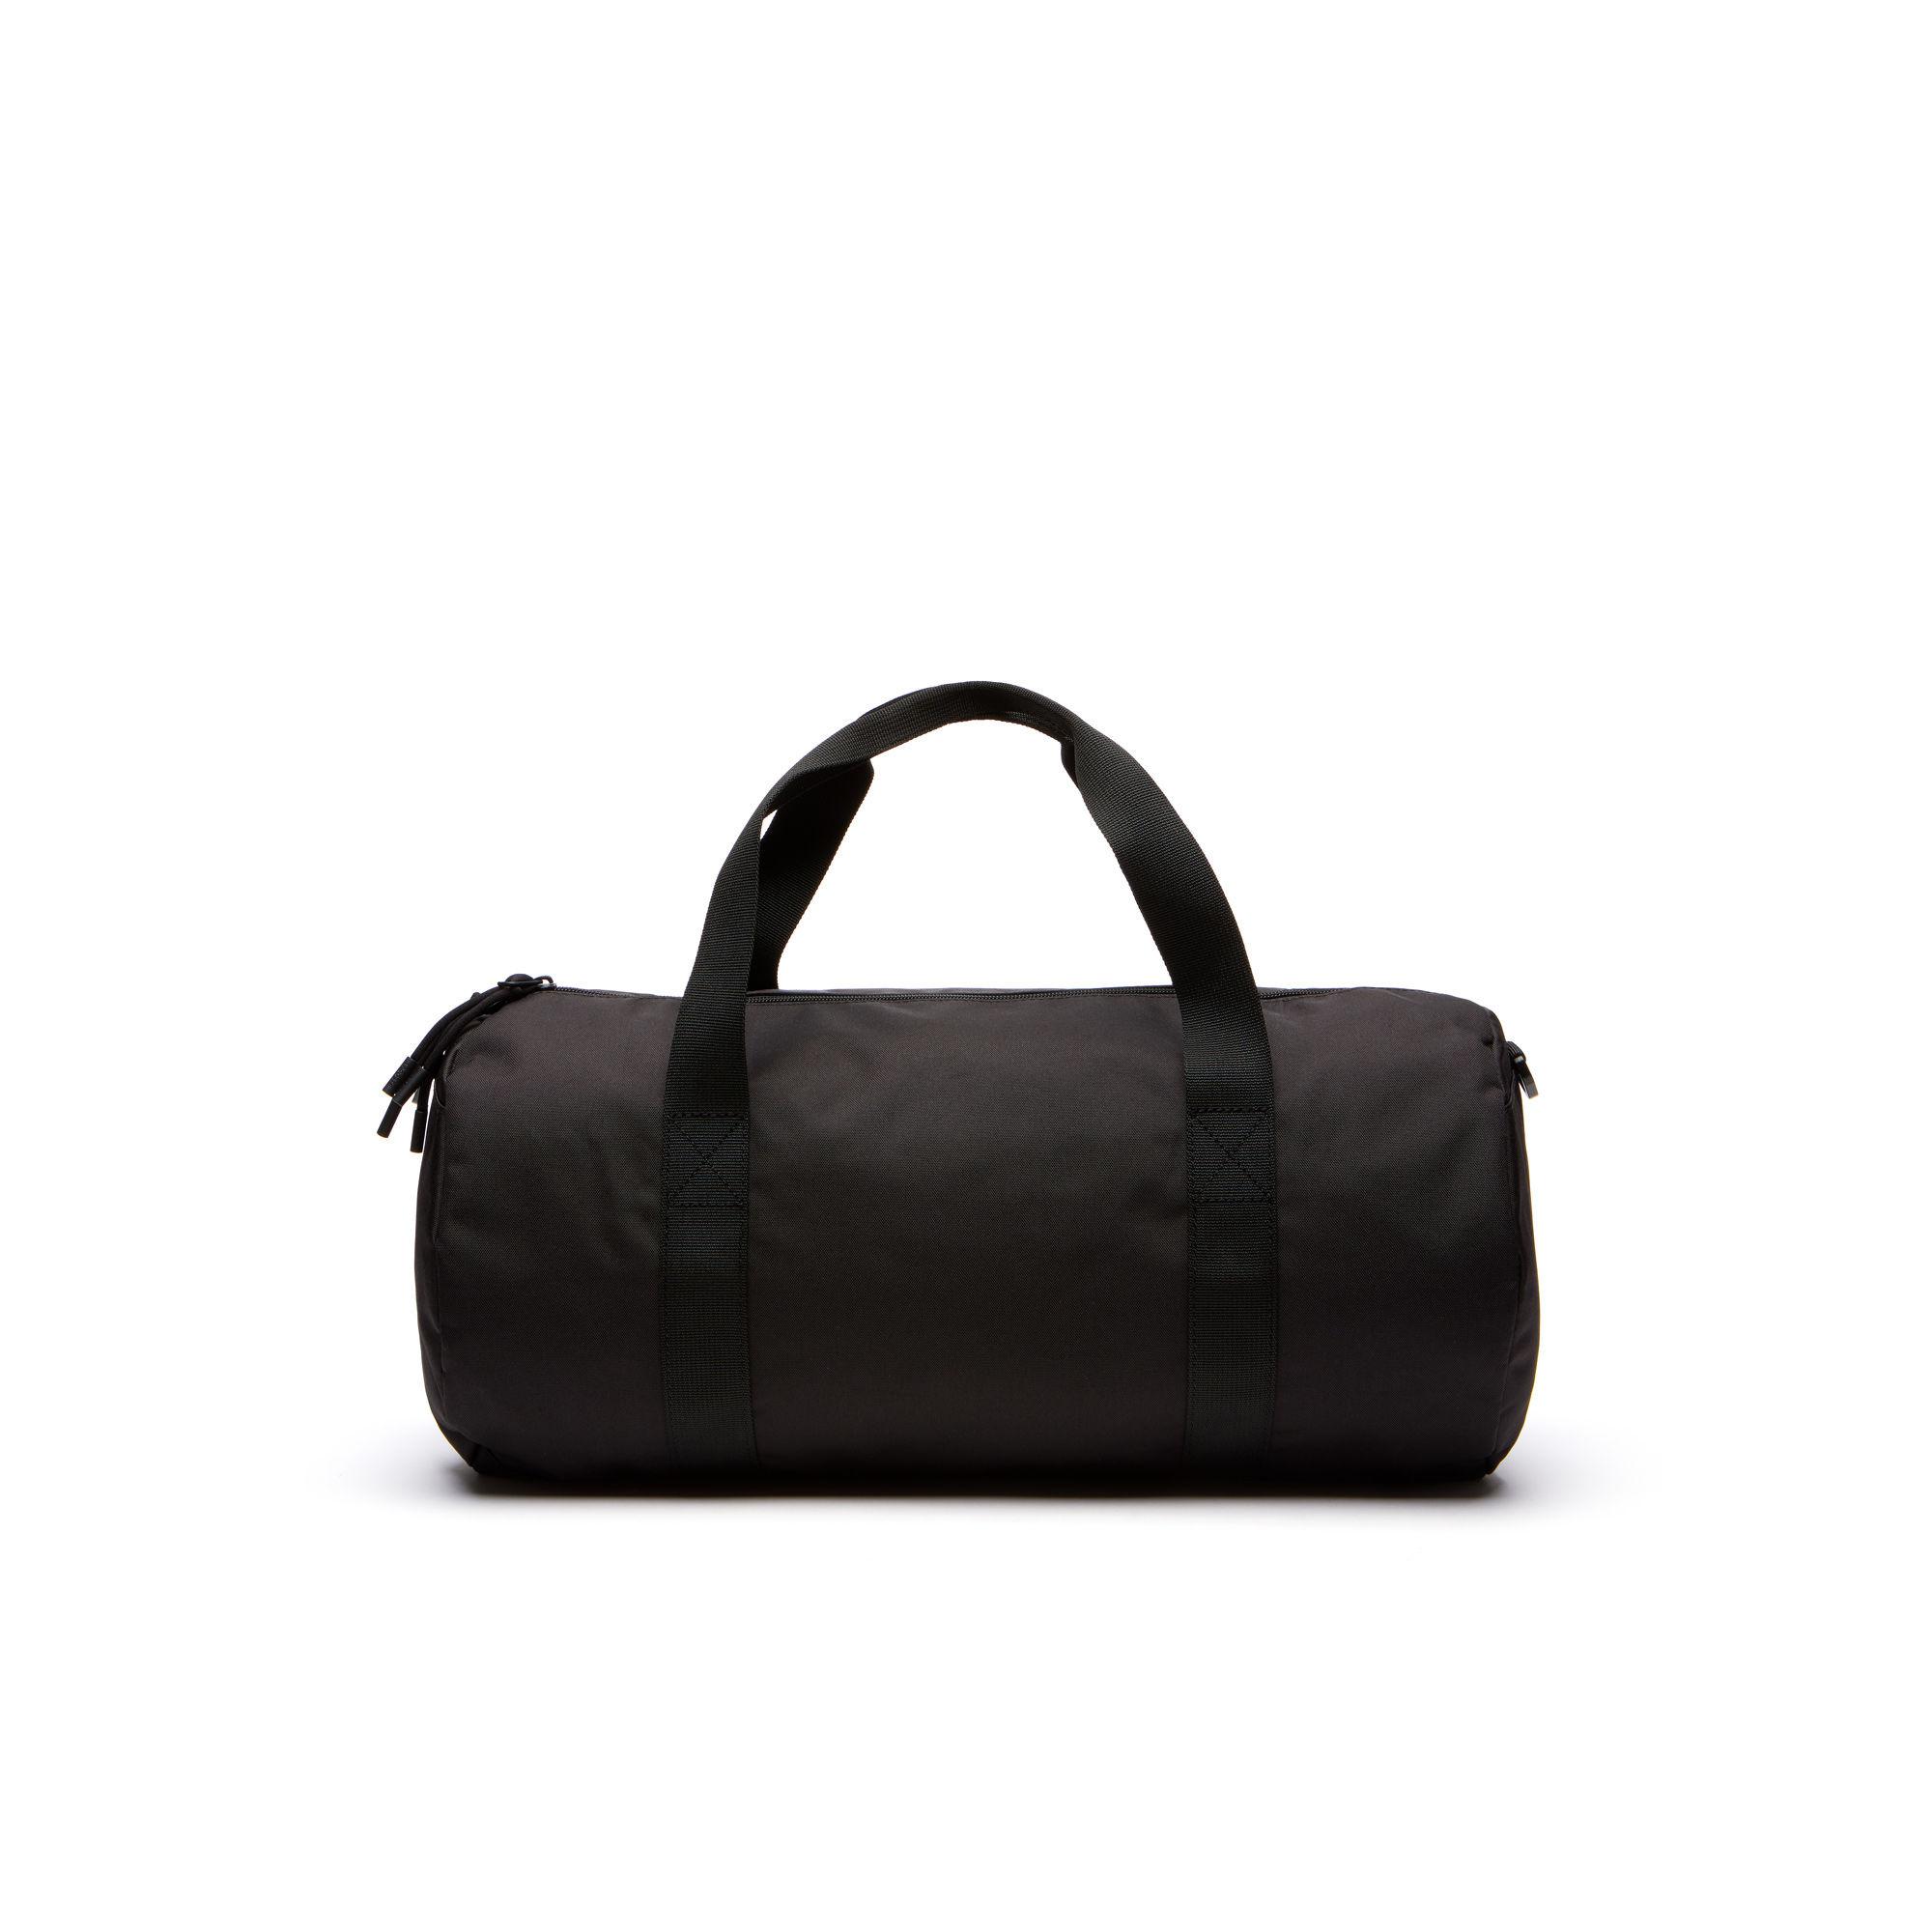 Lacoste Canvas Neocroc Roll Bag in Black for Men - Lyst